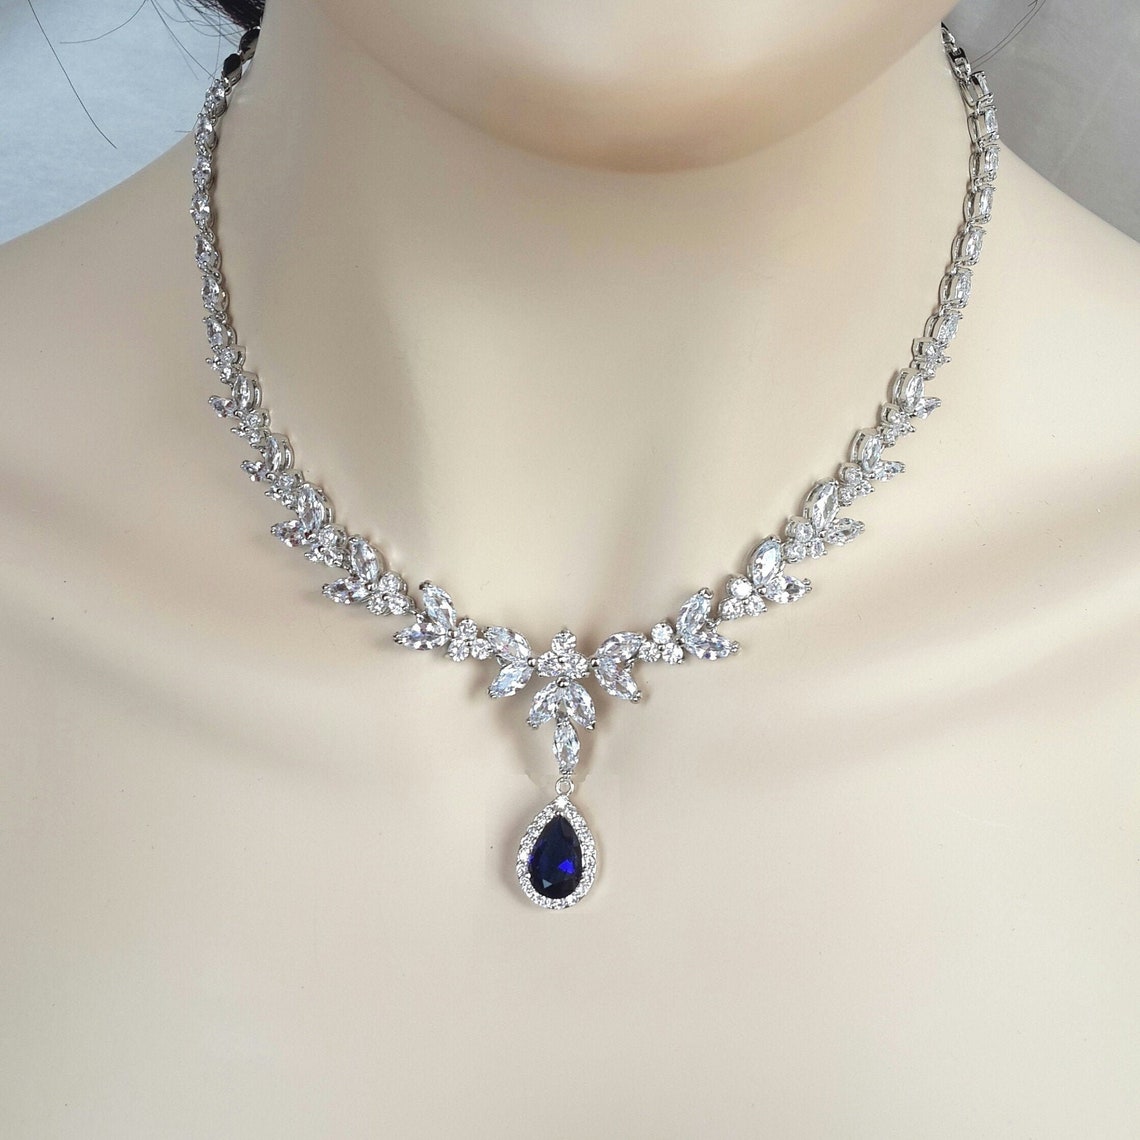 Saphire bridal necklace blue sapphire wedding necklace | Etsy